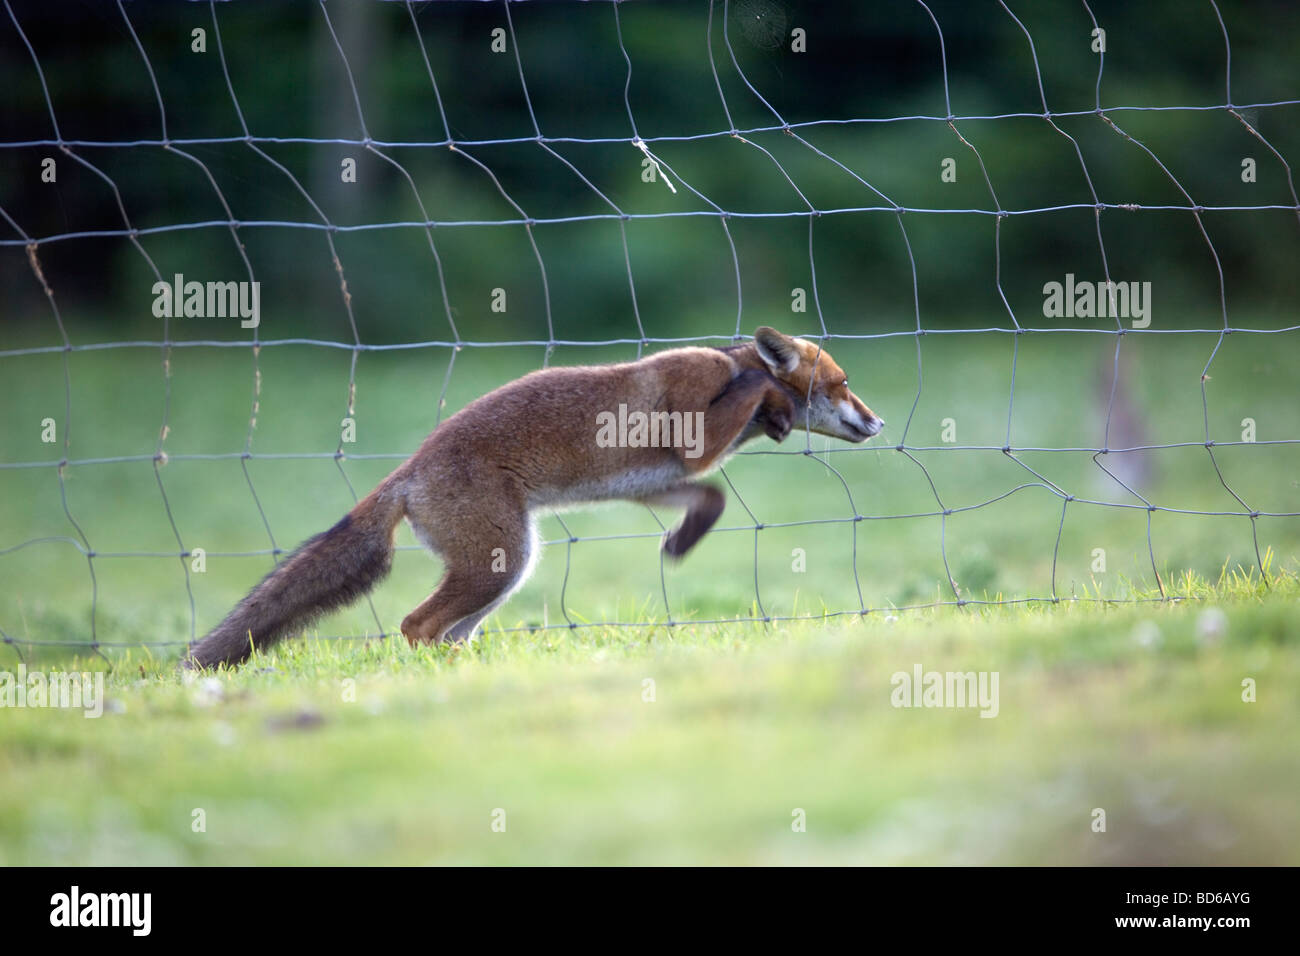 fox Vulpes vulpes cornwall jumping through a fence Stock Photo